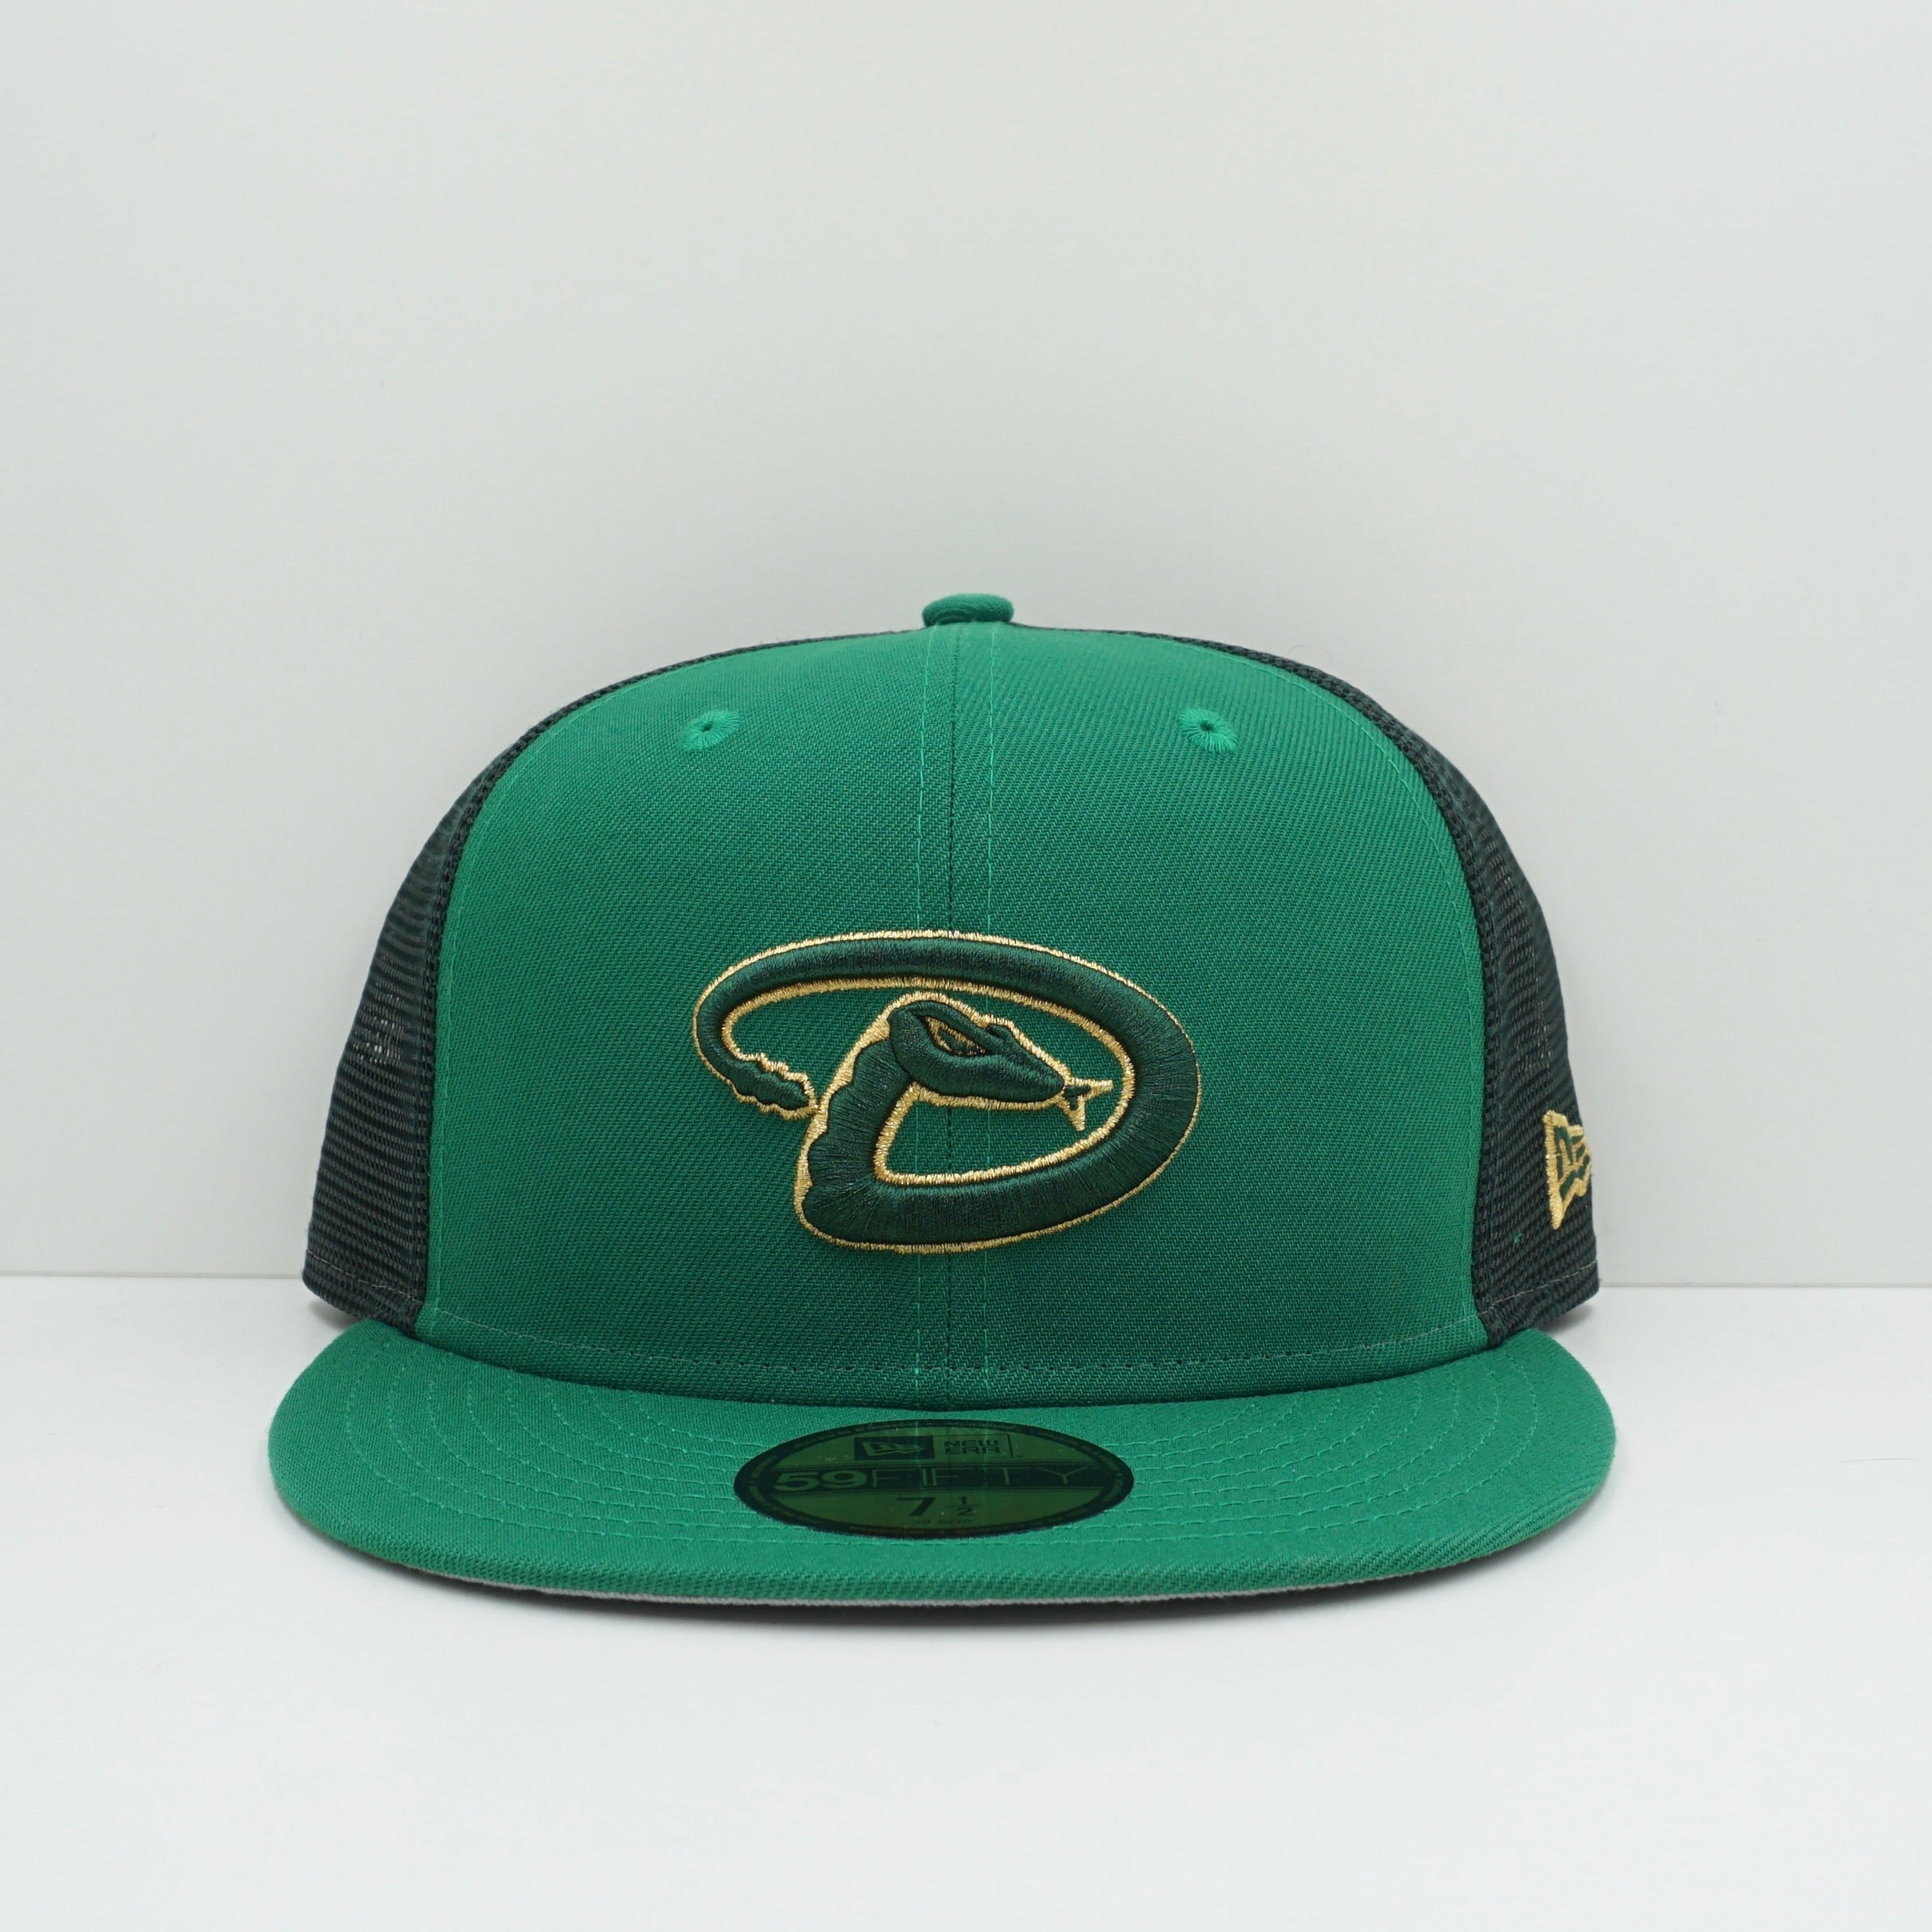 New Era Arizona Diamondbacks Green/Gold Fitted Cap